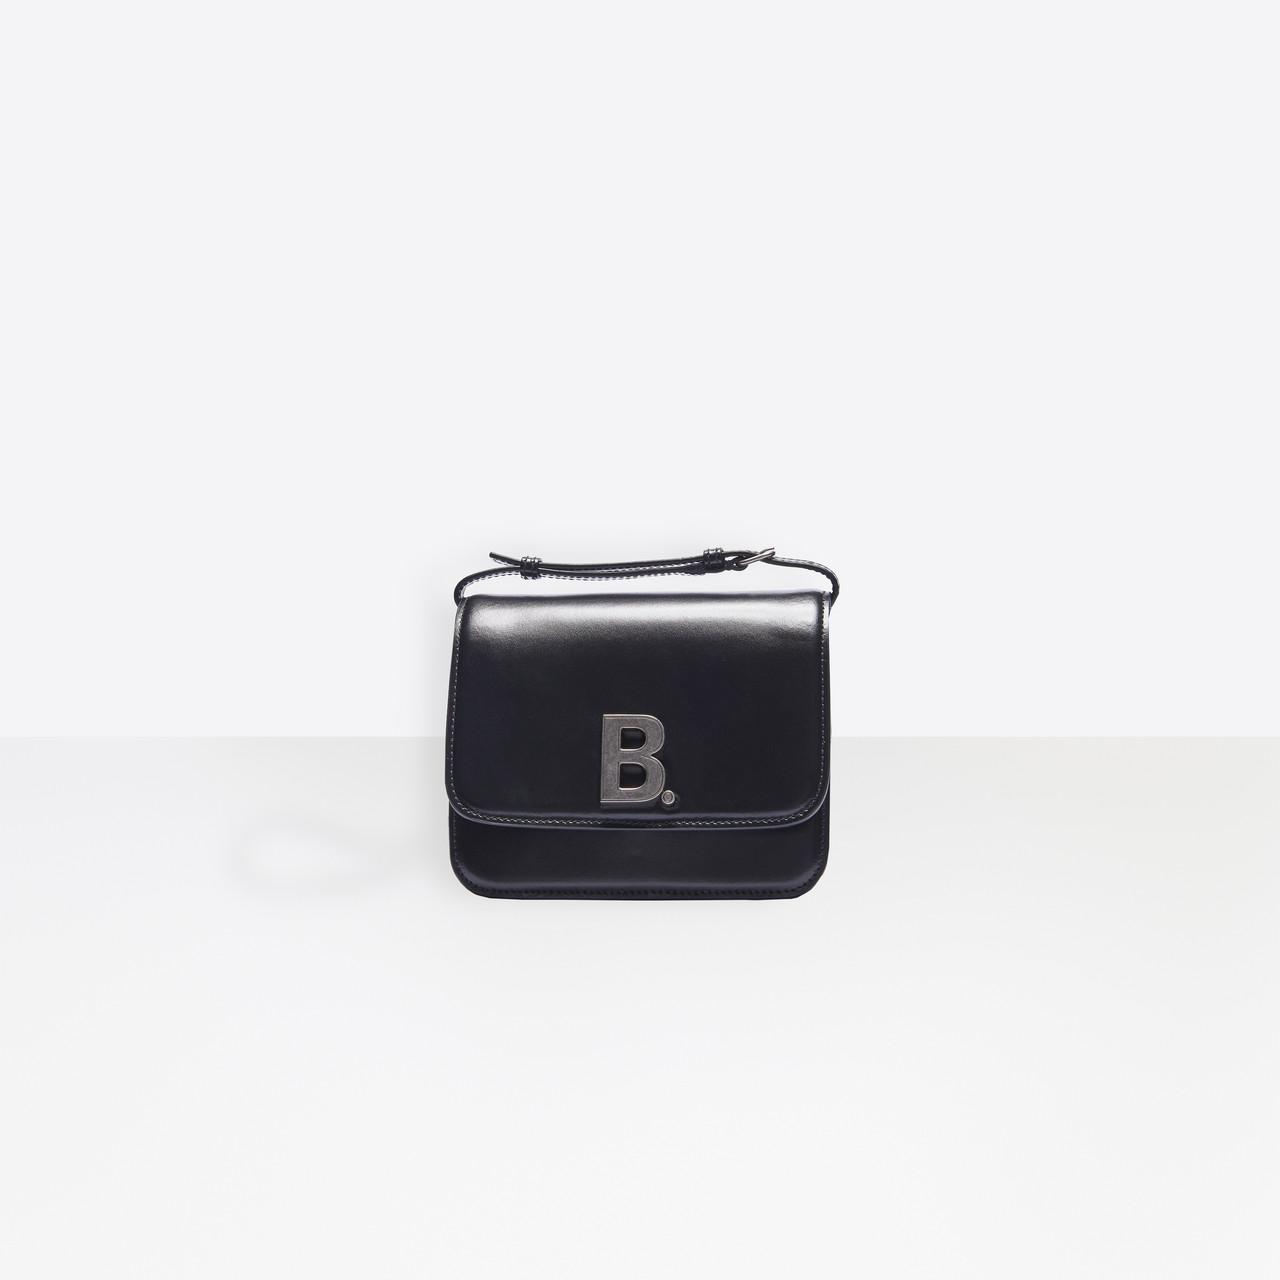 Balenciaga B. Small Bag in Black